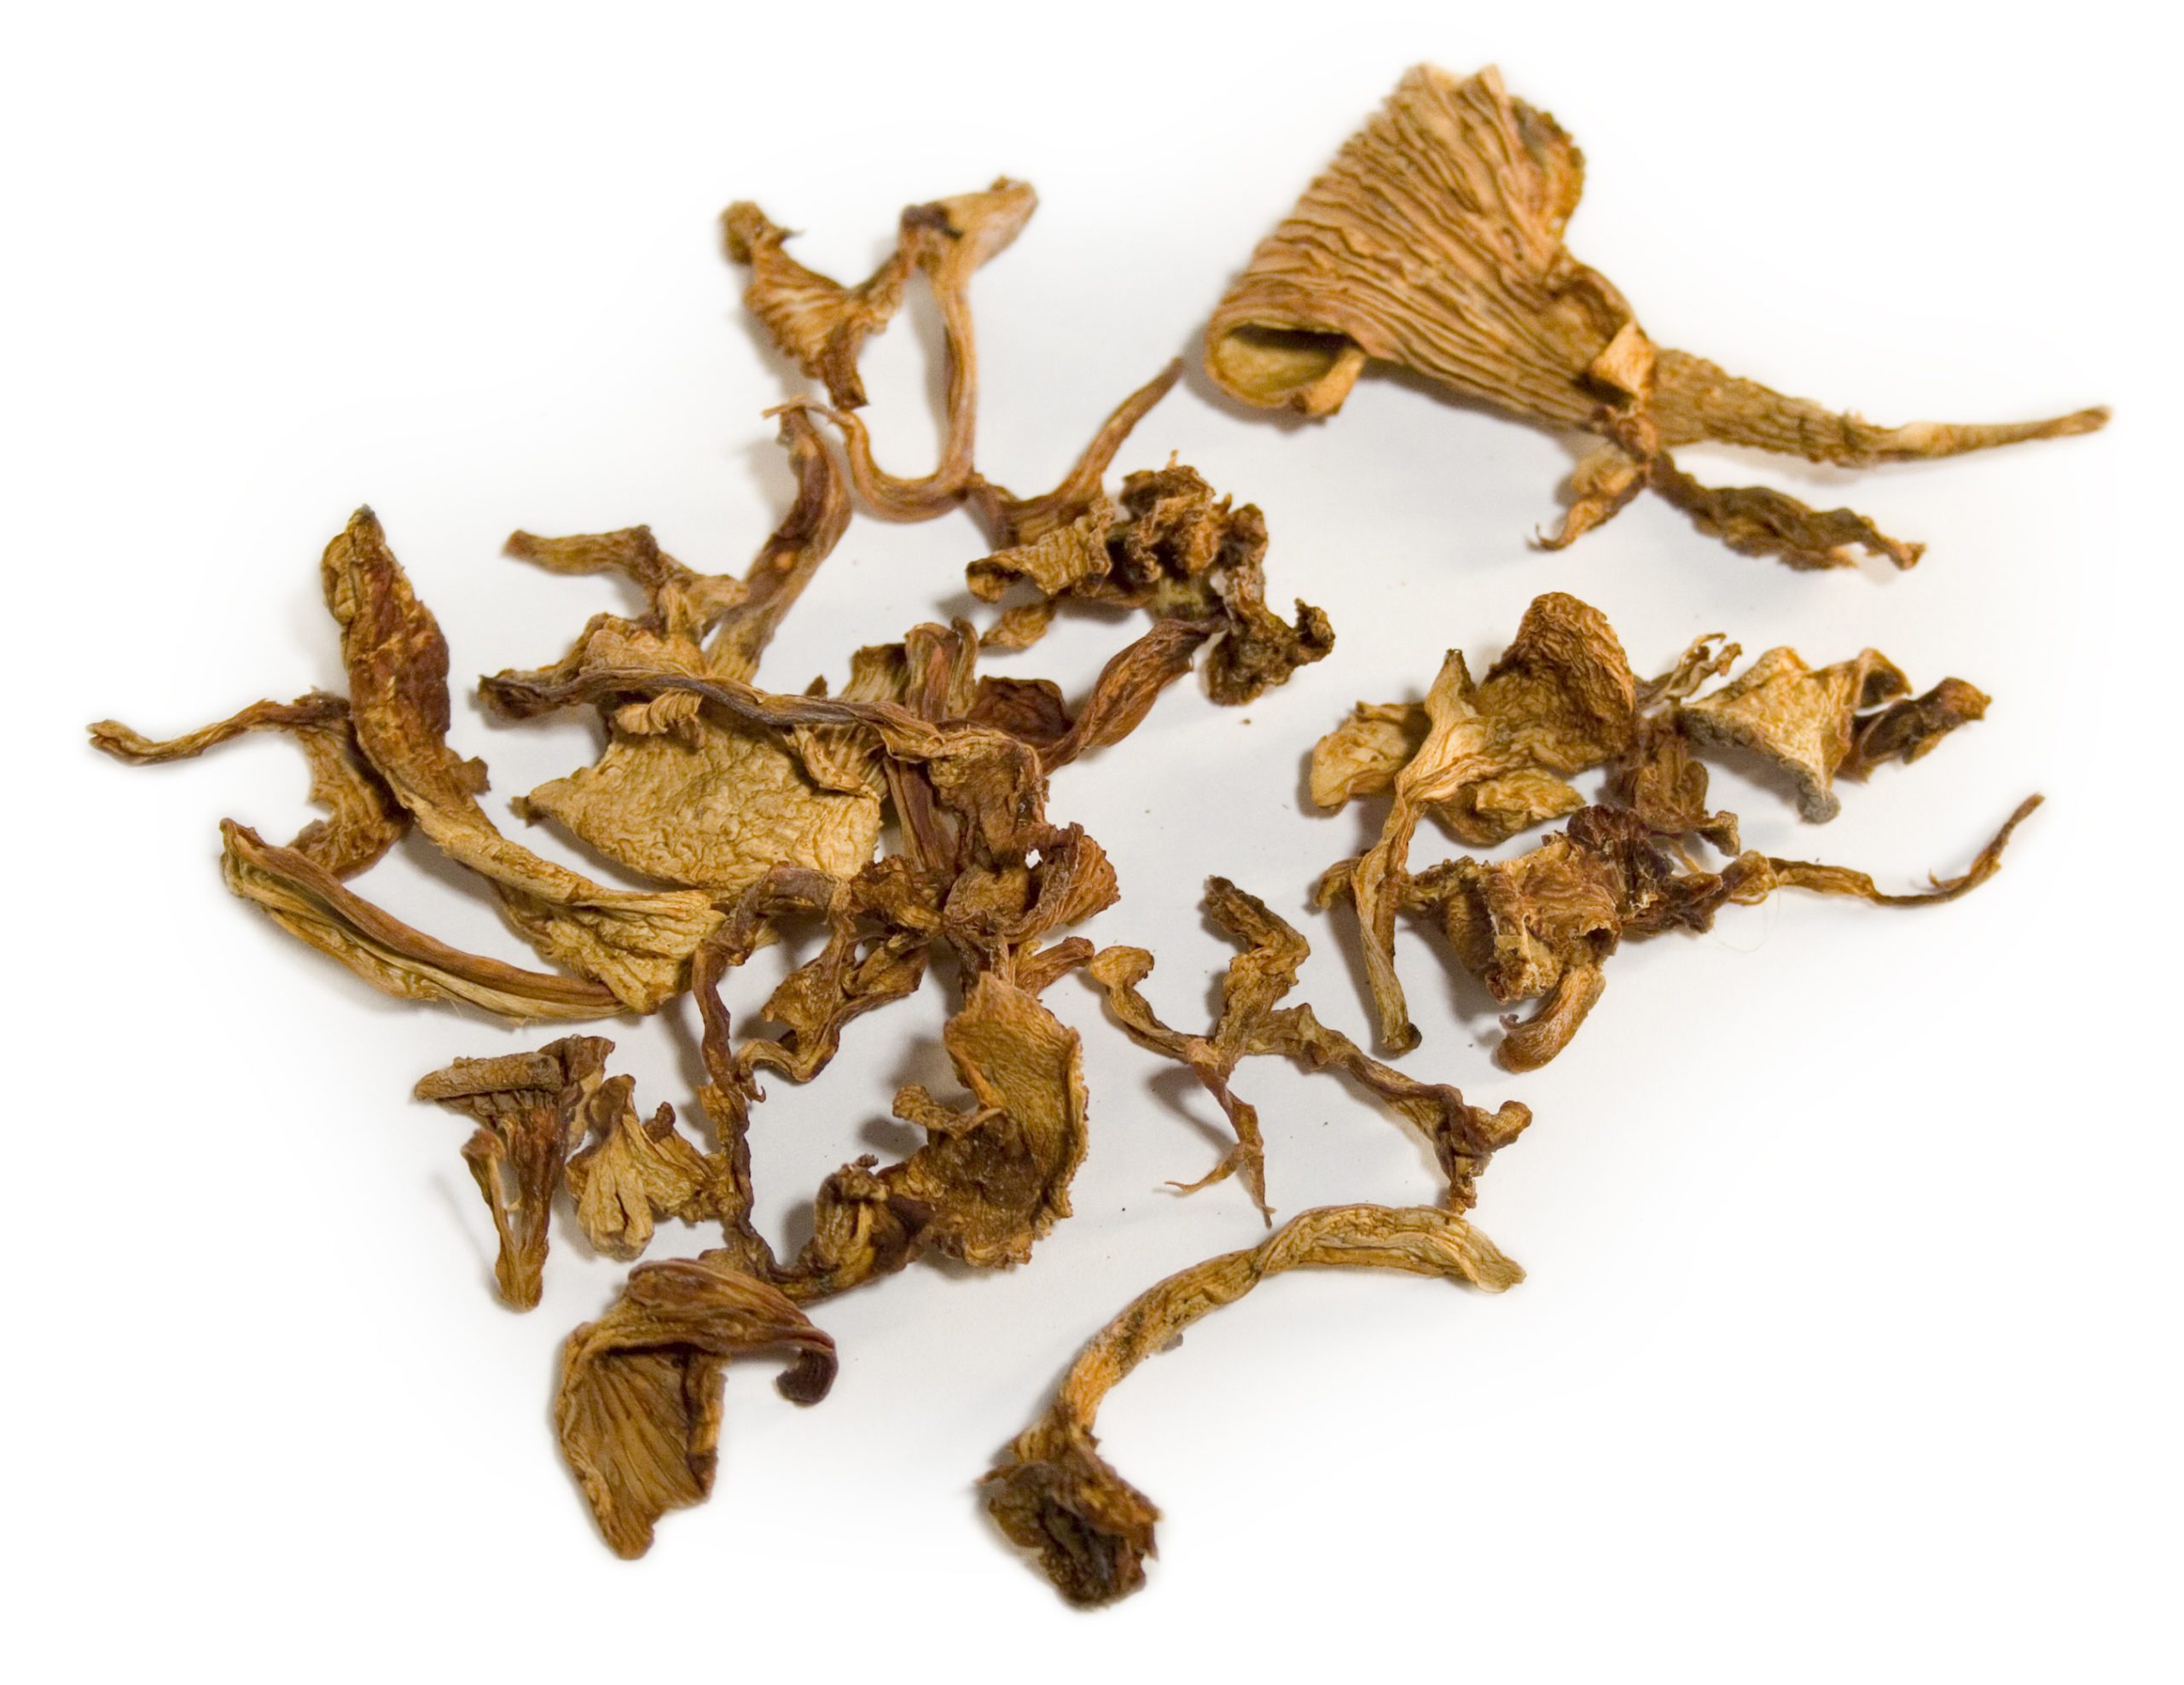 Dried Chanterelle Mushrooms Image